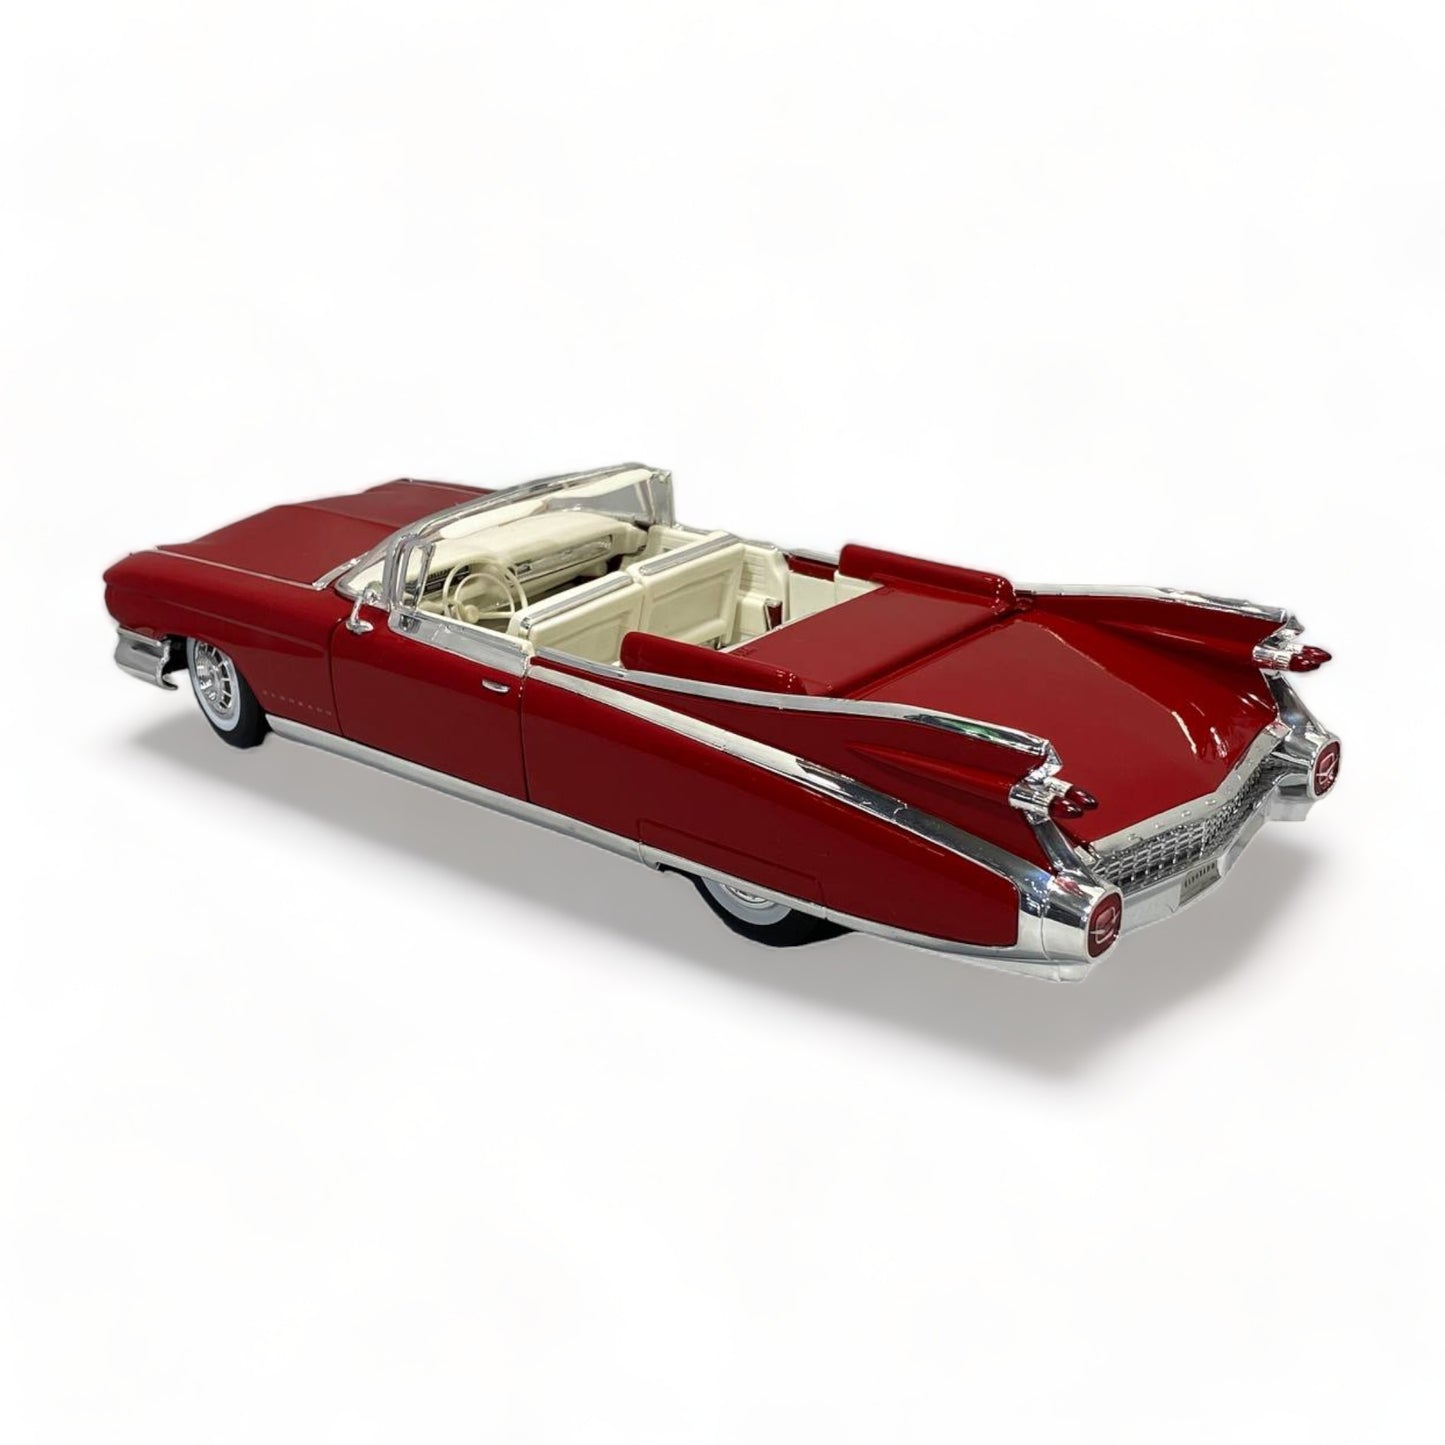 1/18 Diecast Cadillac Eldorado Biarritz  RED 1959 Scale Model Car by Maisto|Sold in Dturman.com Dubai UAE.